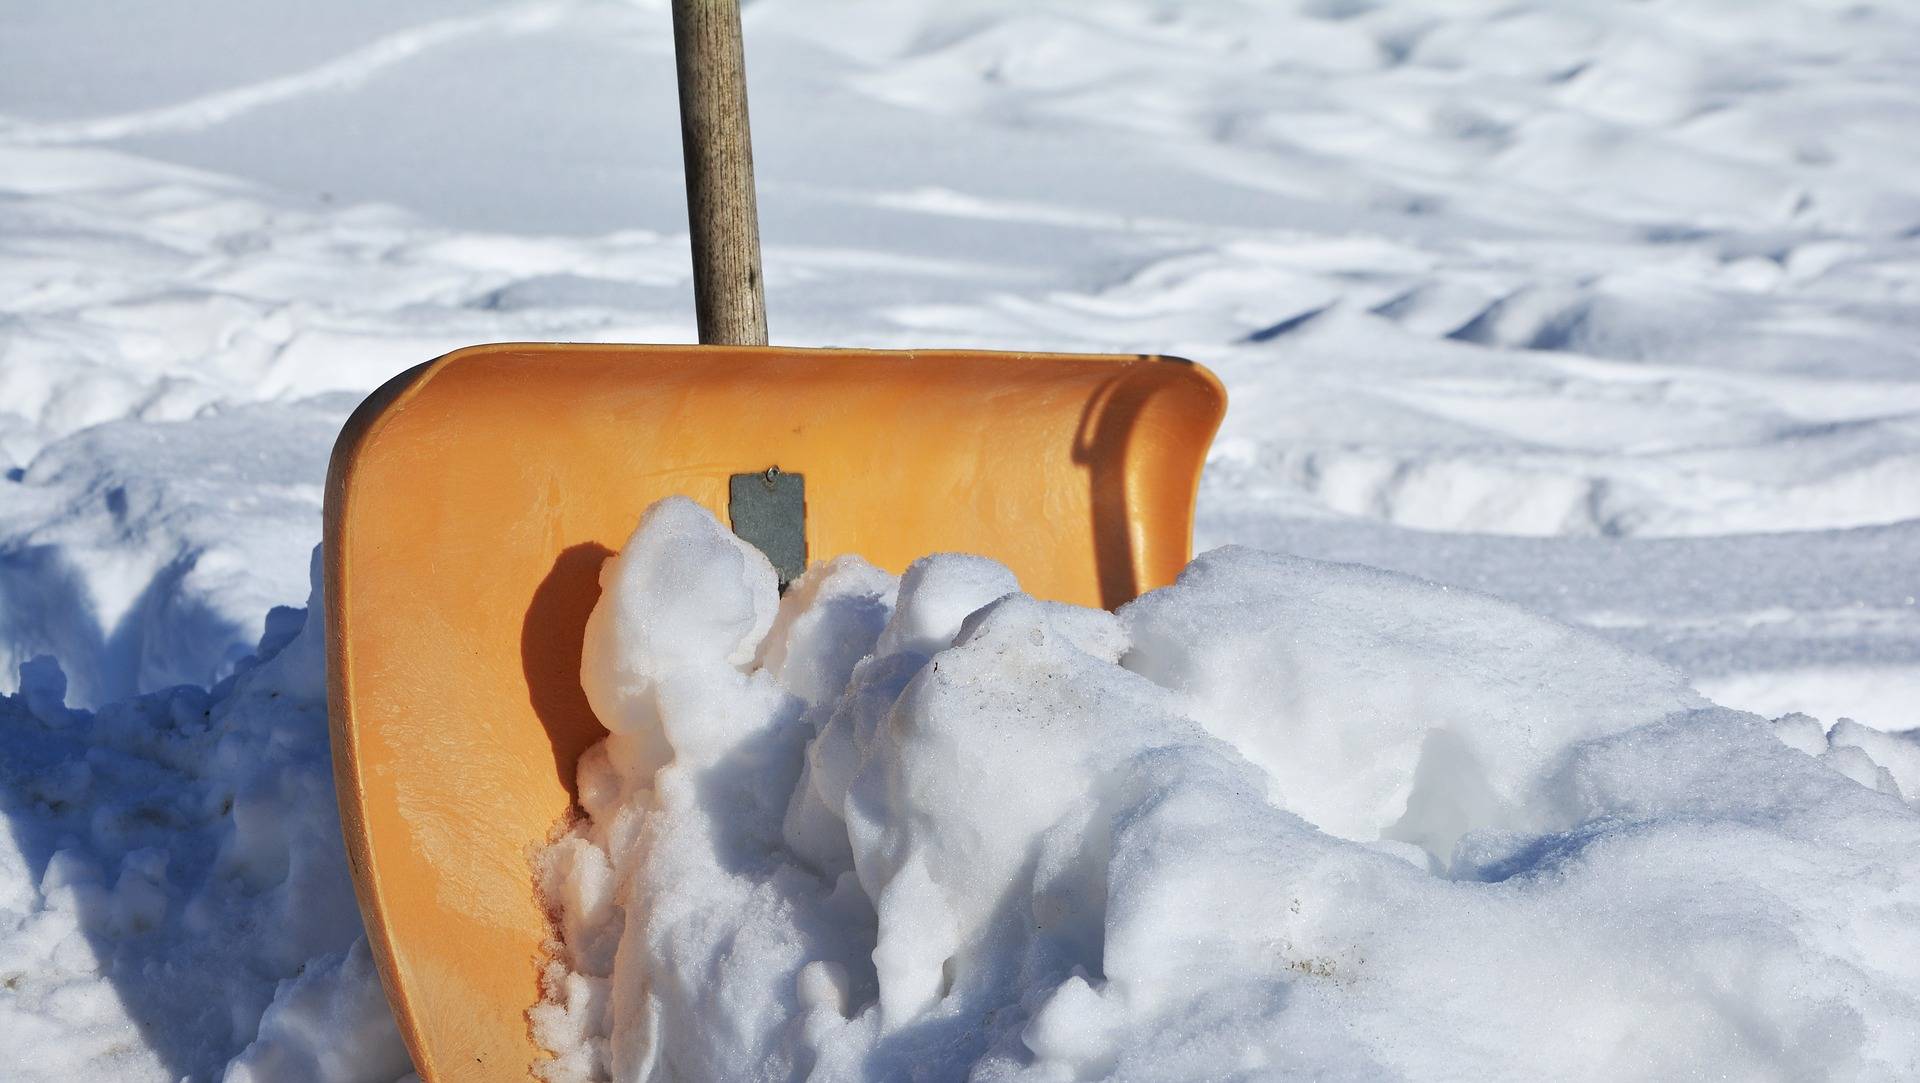 snow shoveling safely